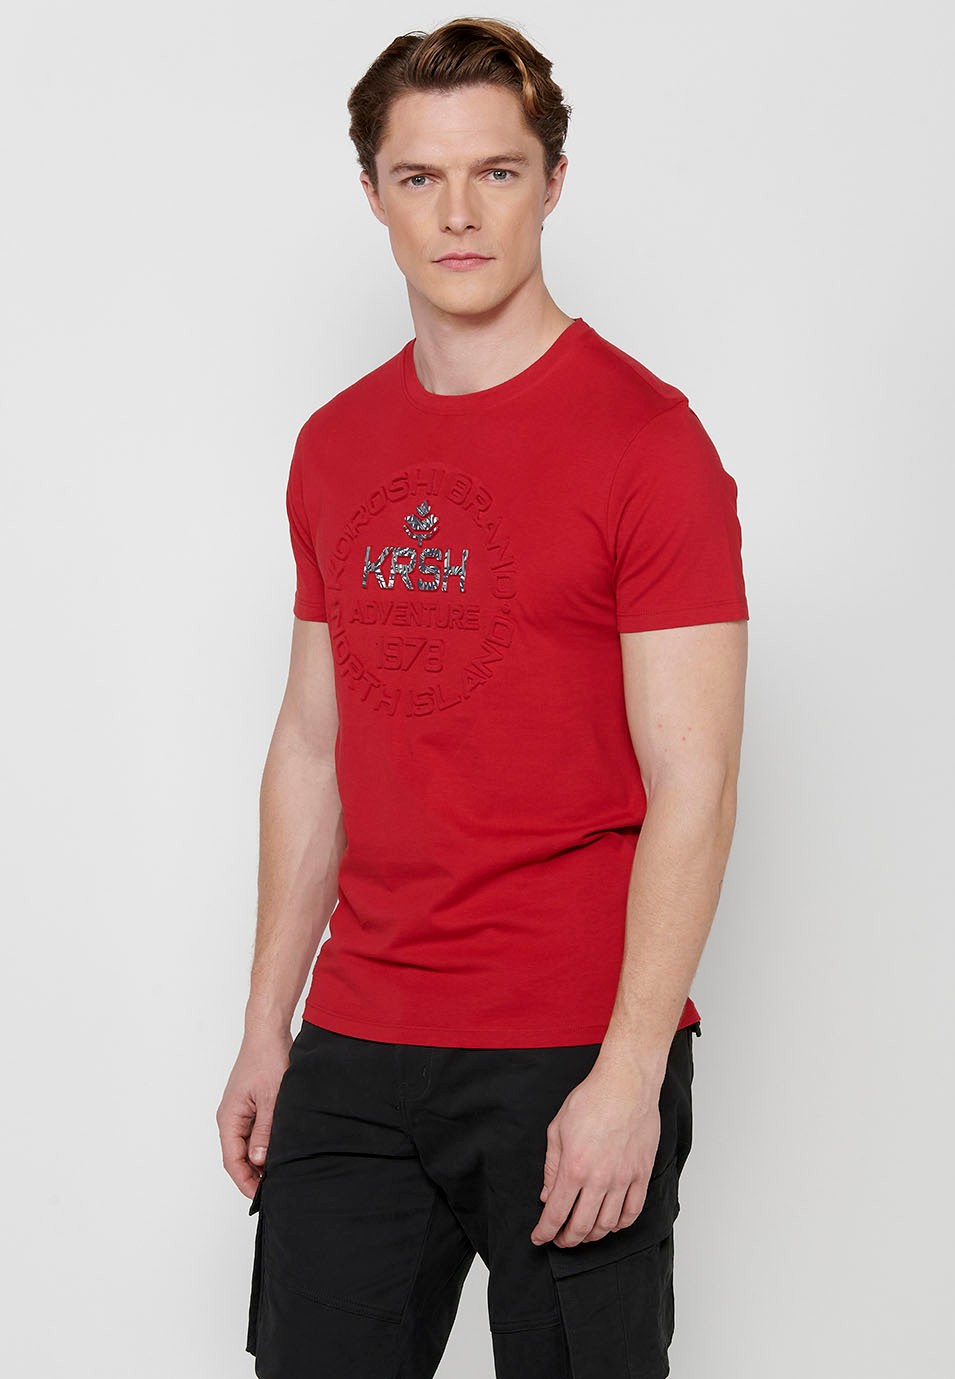 Men's Red Color Round Neck Cotton Short Sleeve T-shirt 4